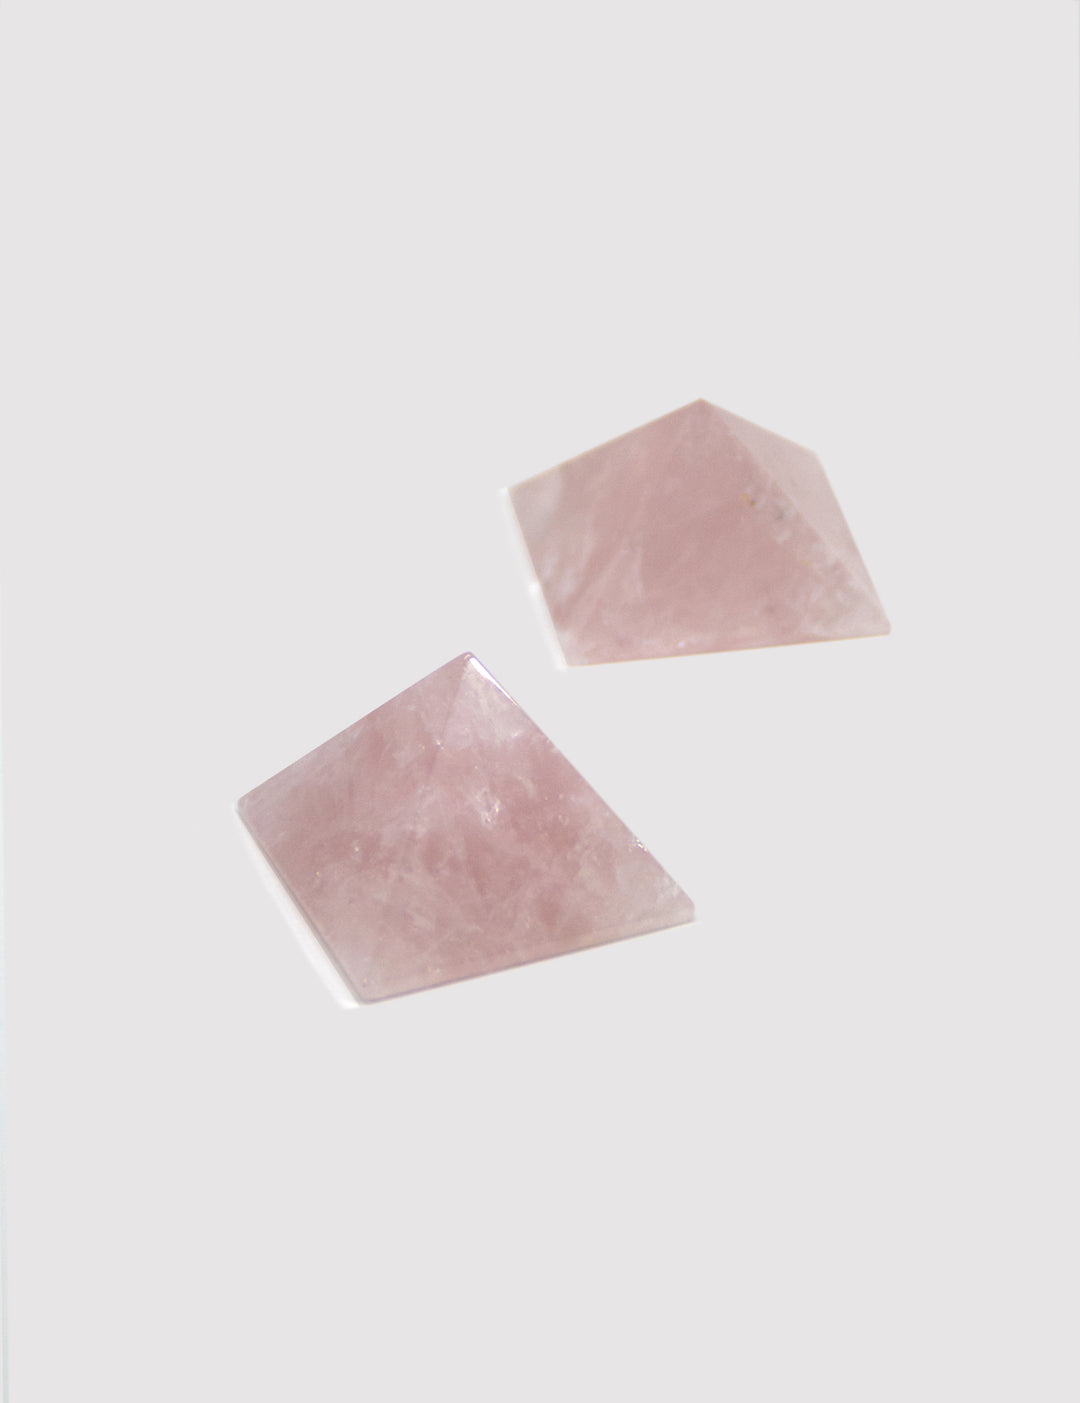 llayers pyramide pierre quartz rose lithothérapie meditation pink quartz stone pyramid